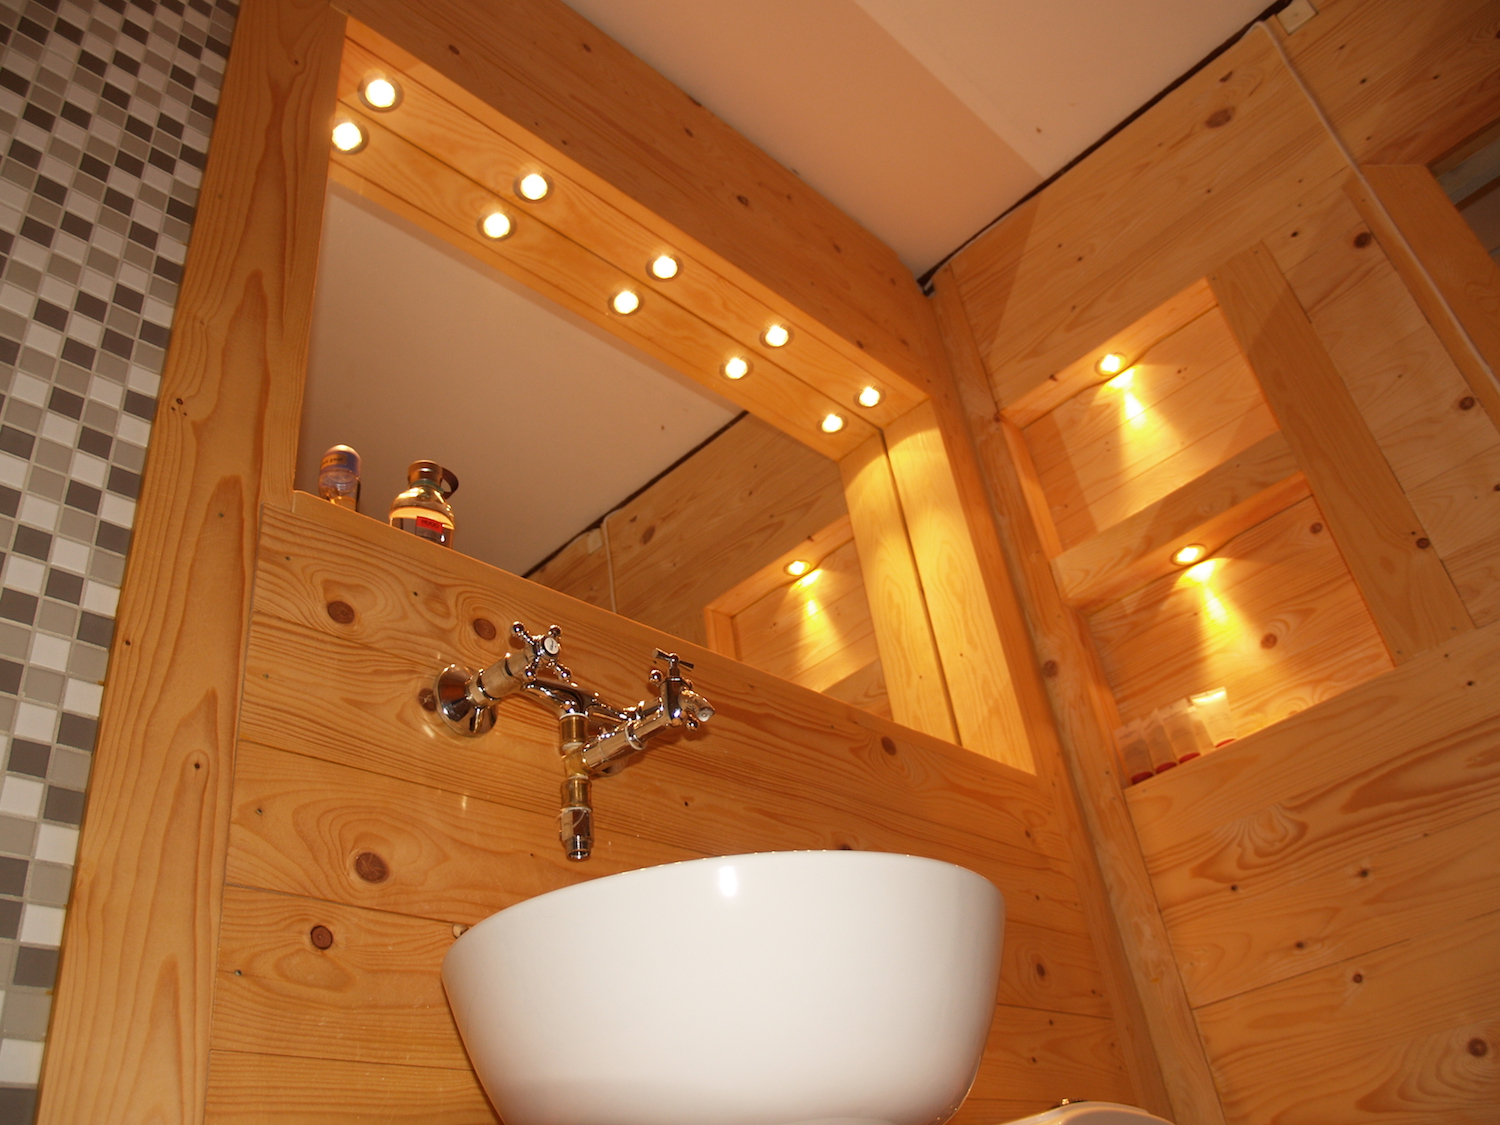 NordicLife interior - sauna style bathroom